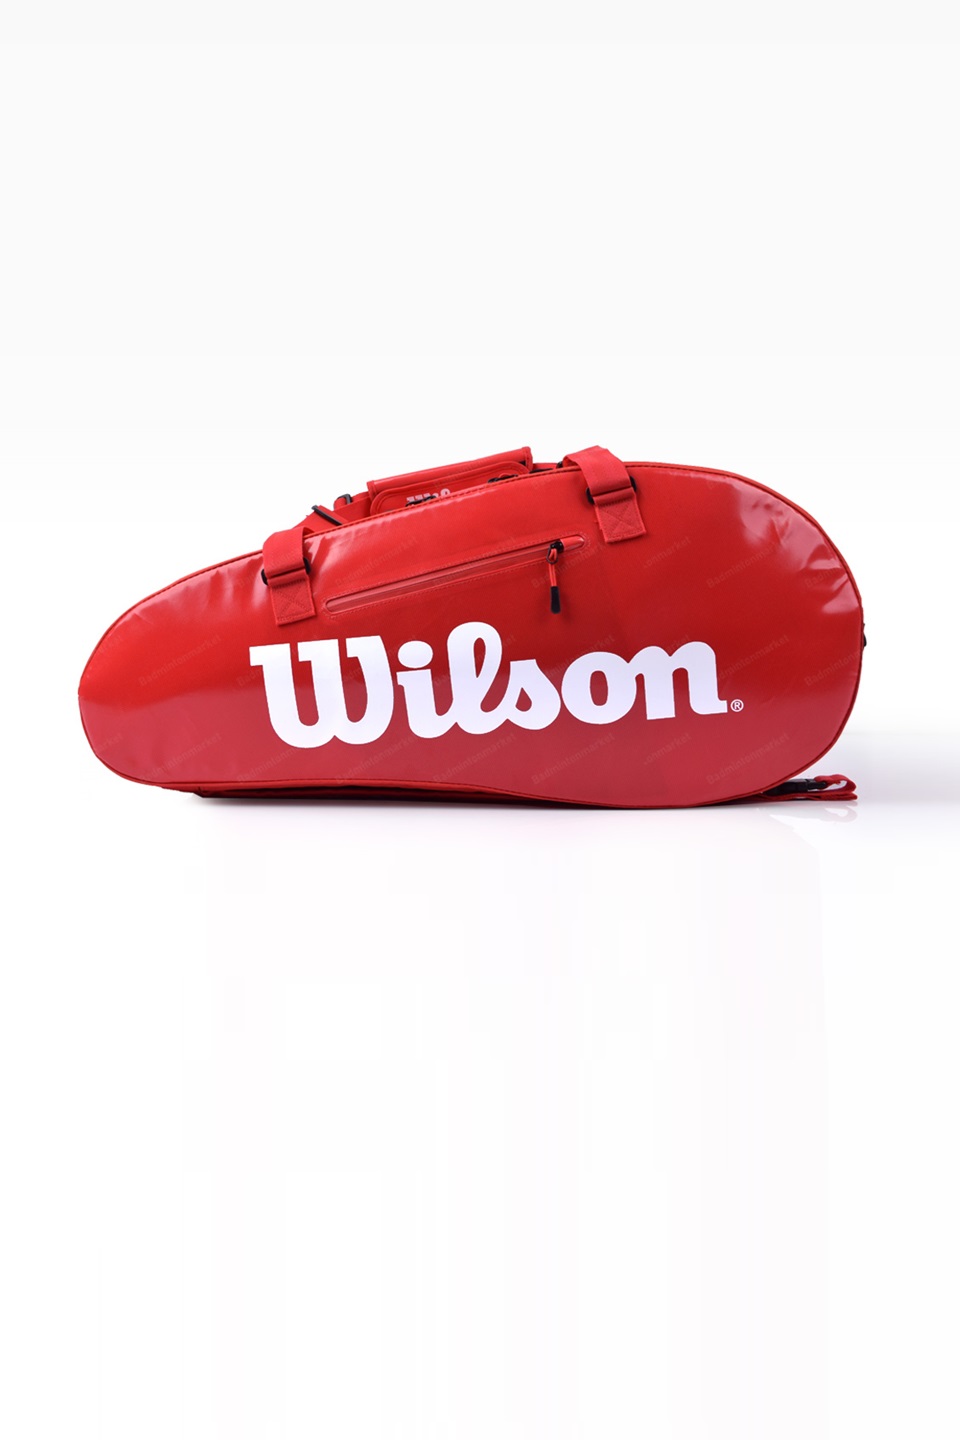 WİLSON - Wilson Süper Tour 3 Comp 15X Raket Çantası